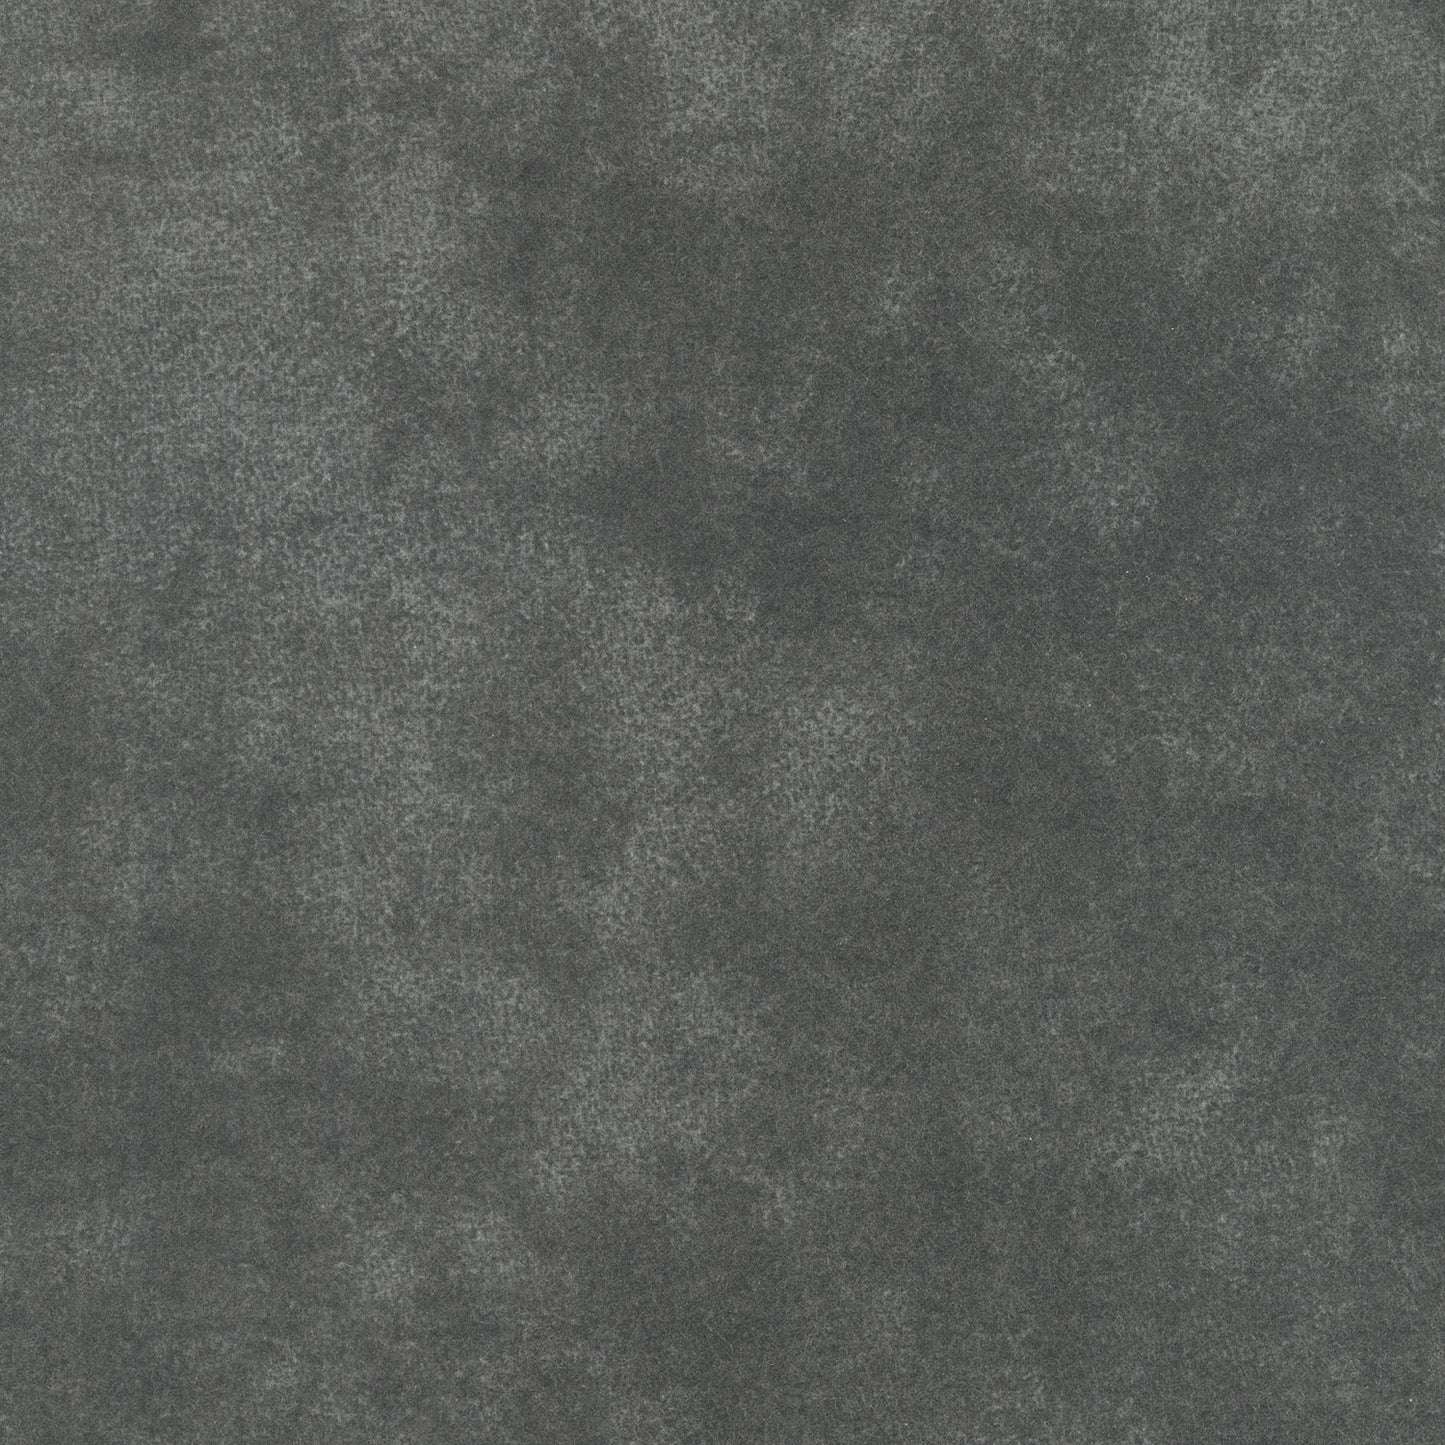 Woolies Flannel - Colorwash - Light Black Yardage Primary Image